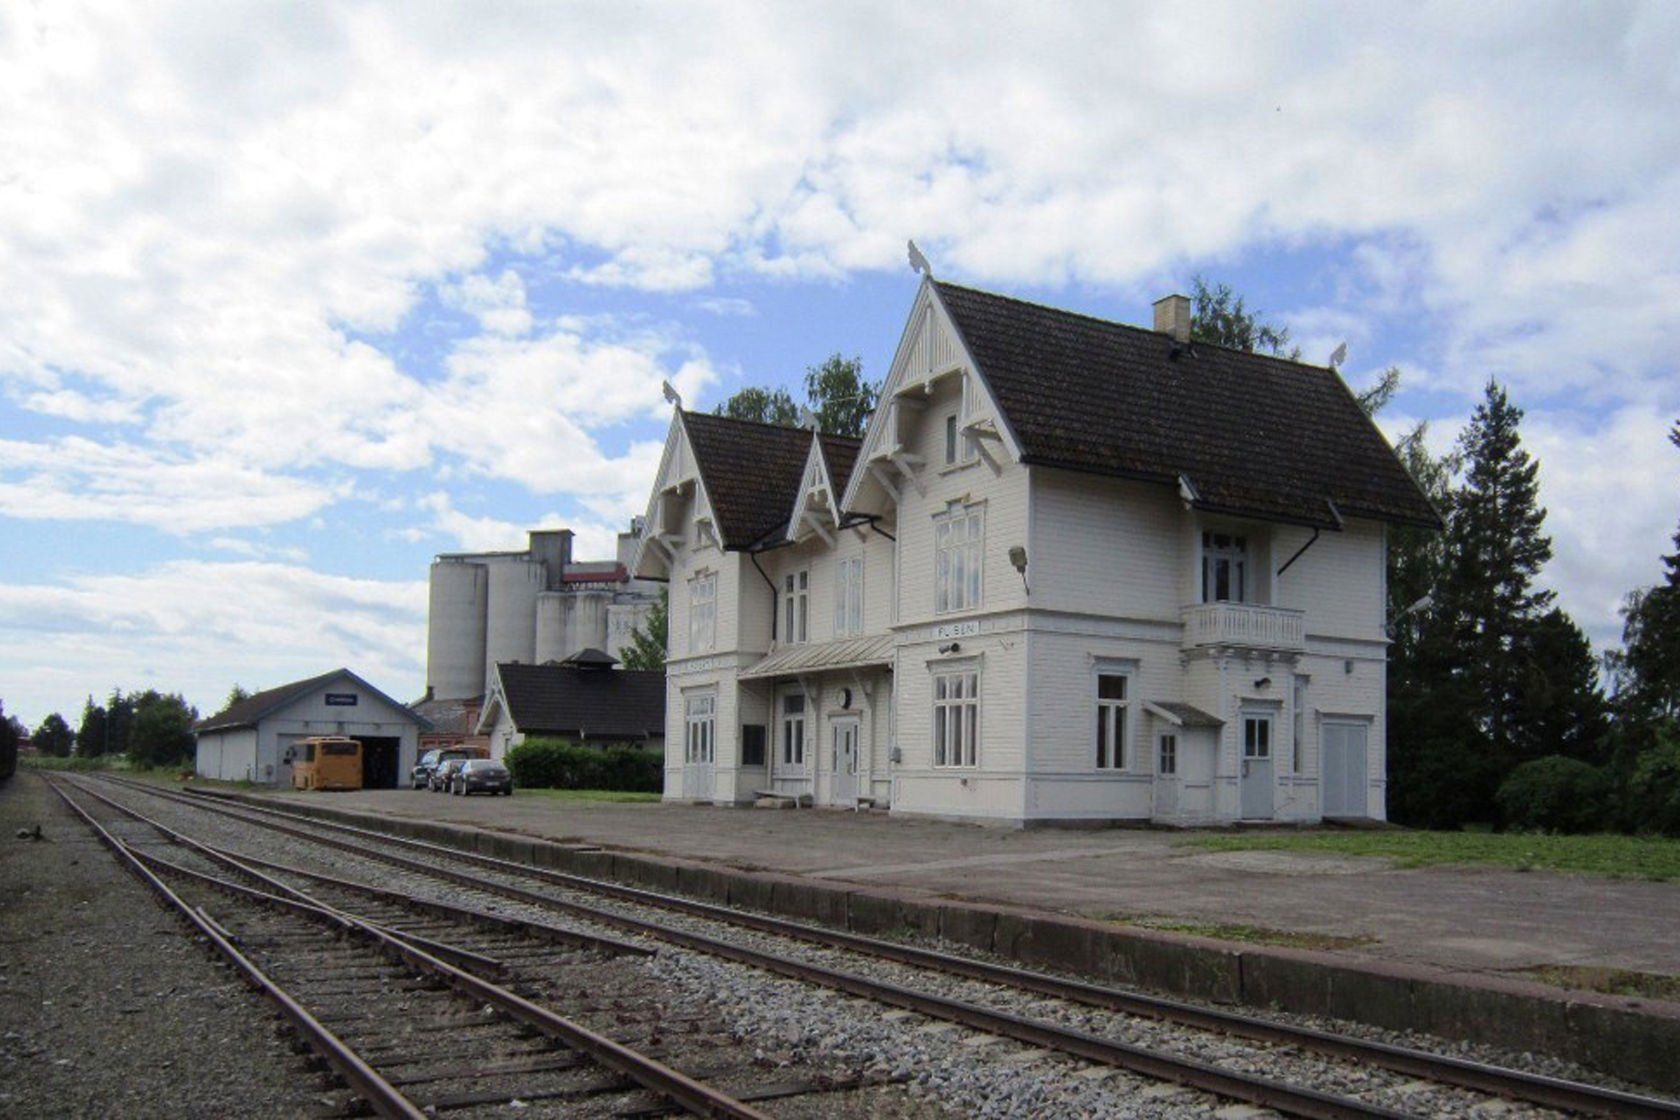 Tracks and station building at Flisa station